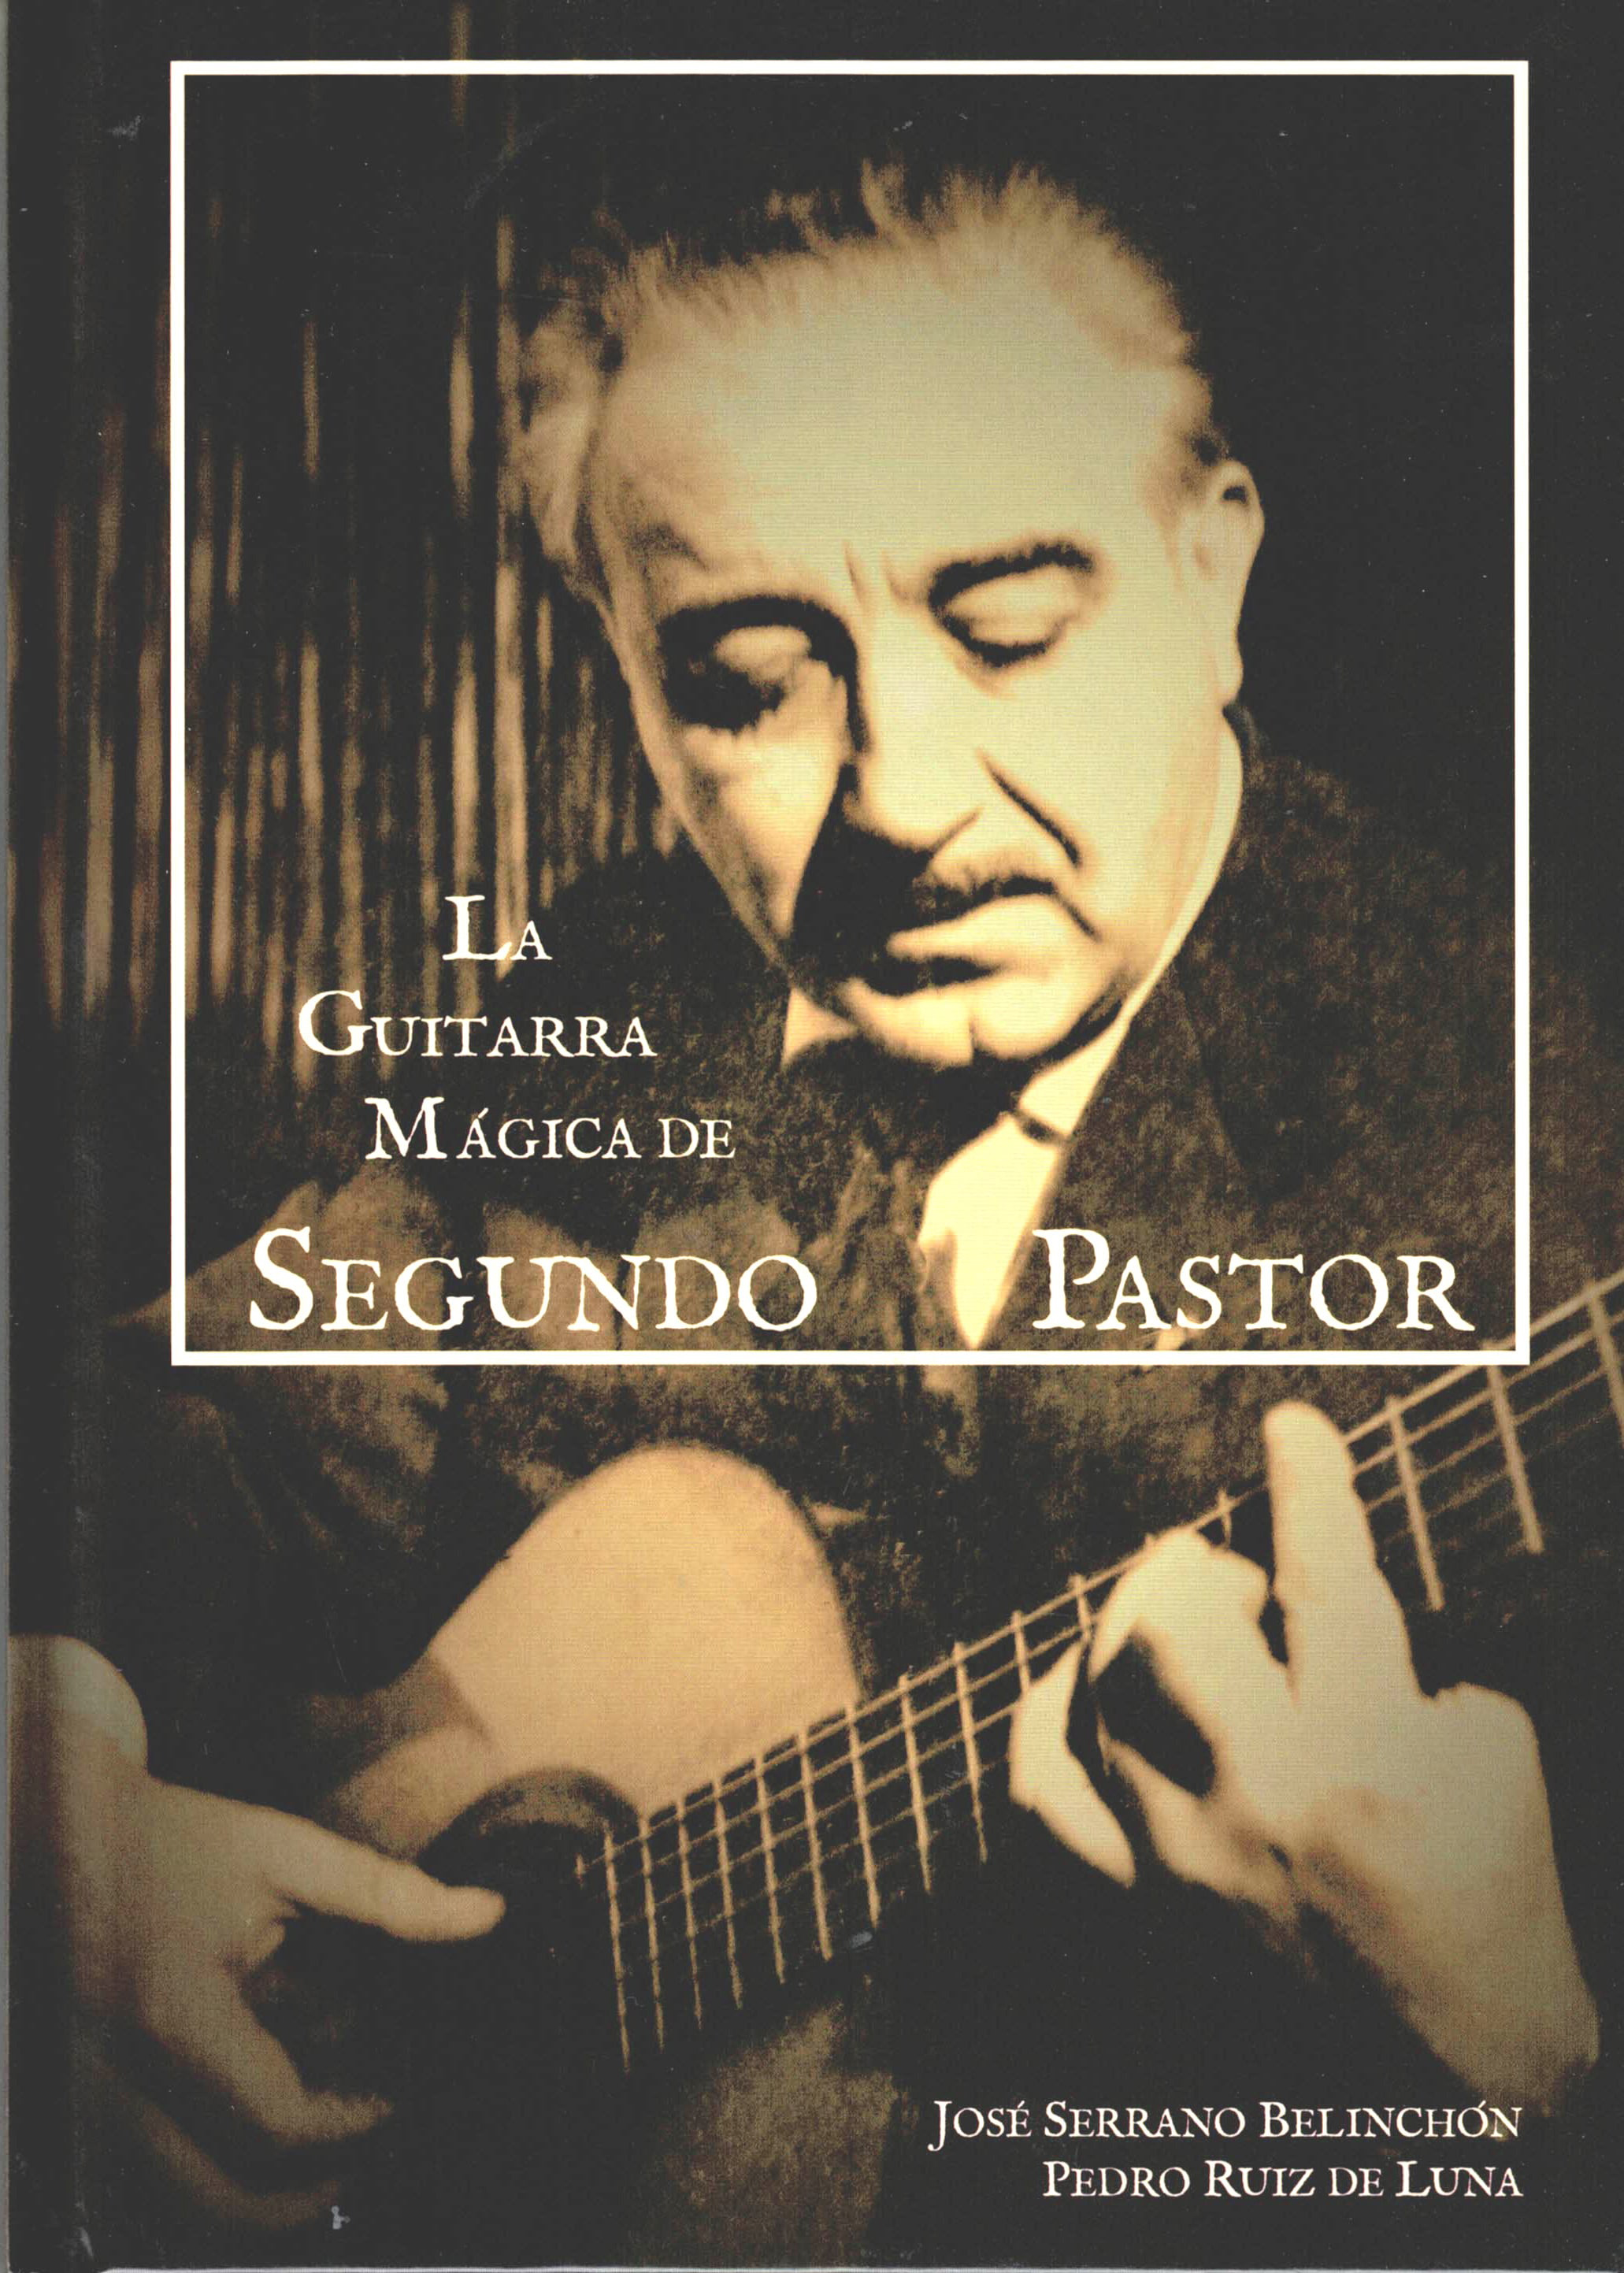 La Gitarra Magica de Segundo Pastor